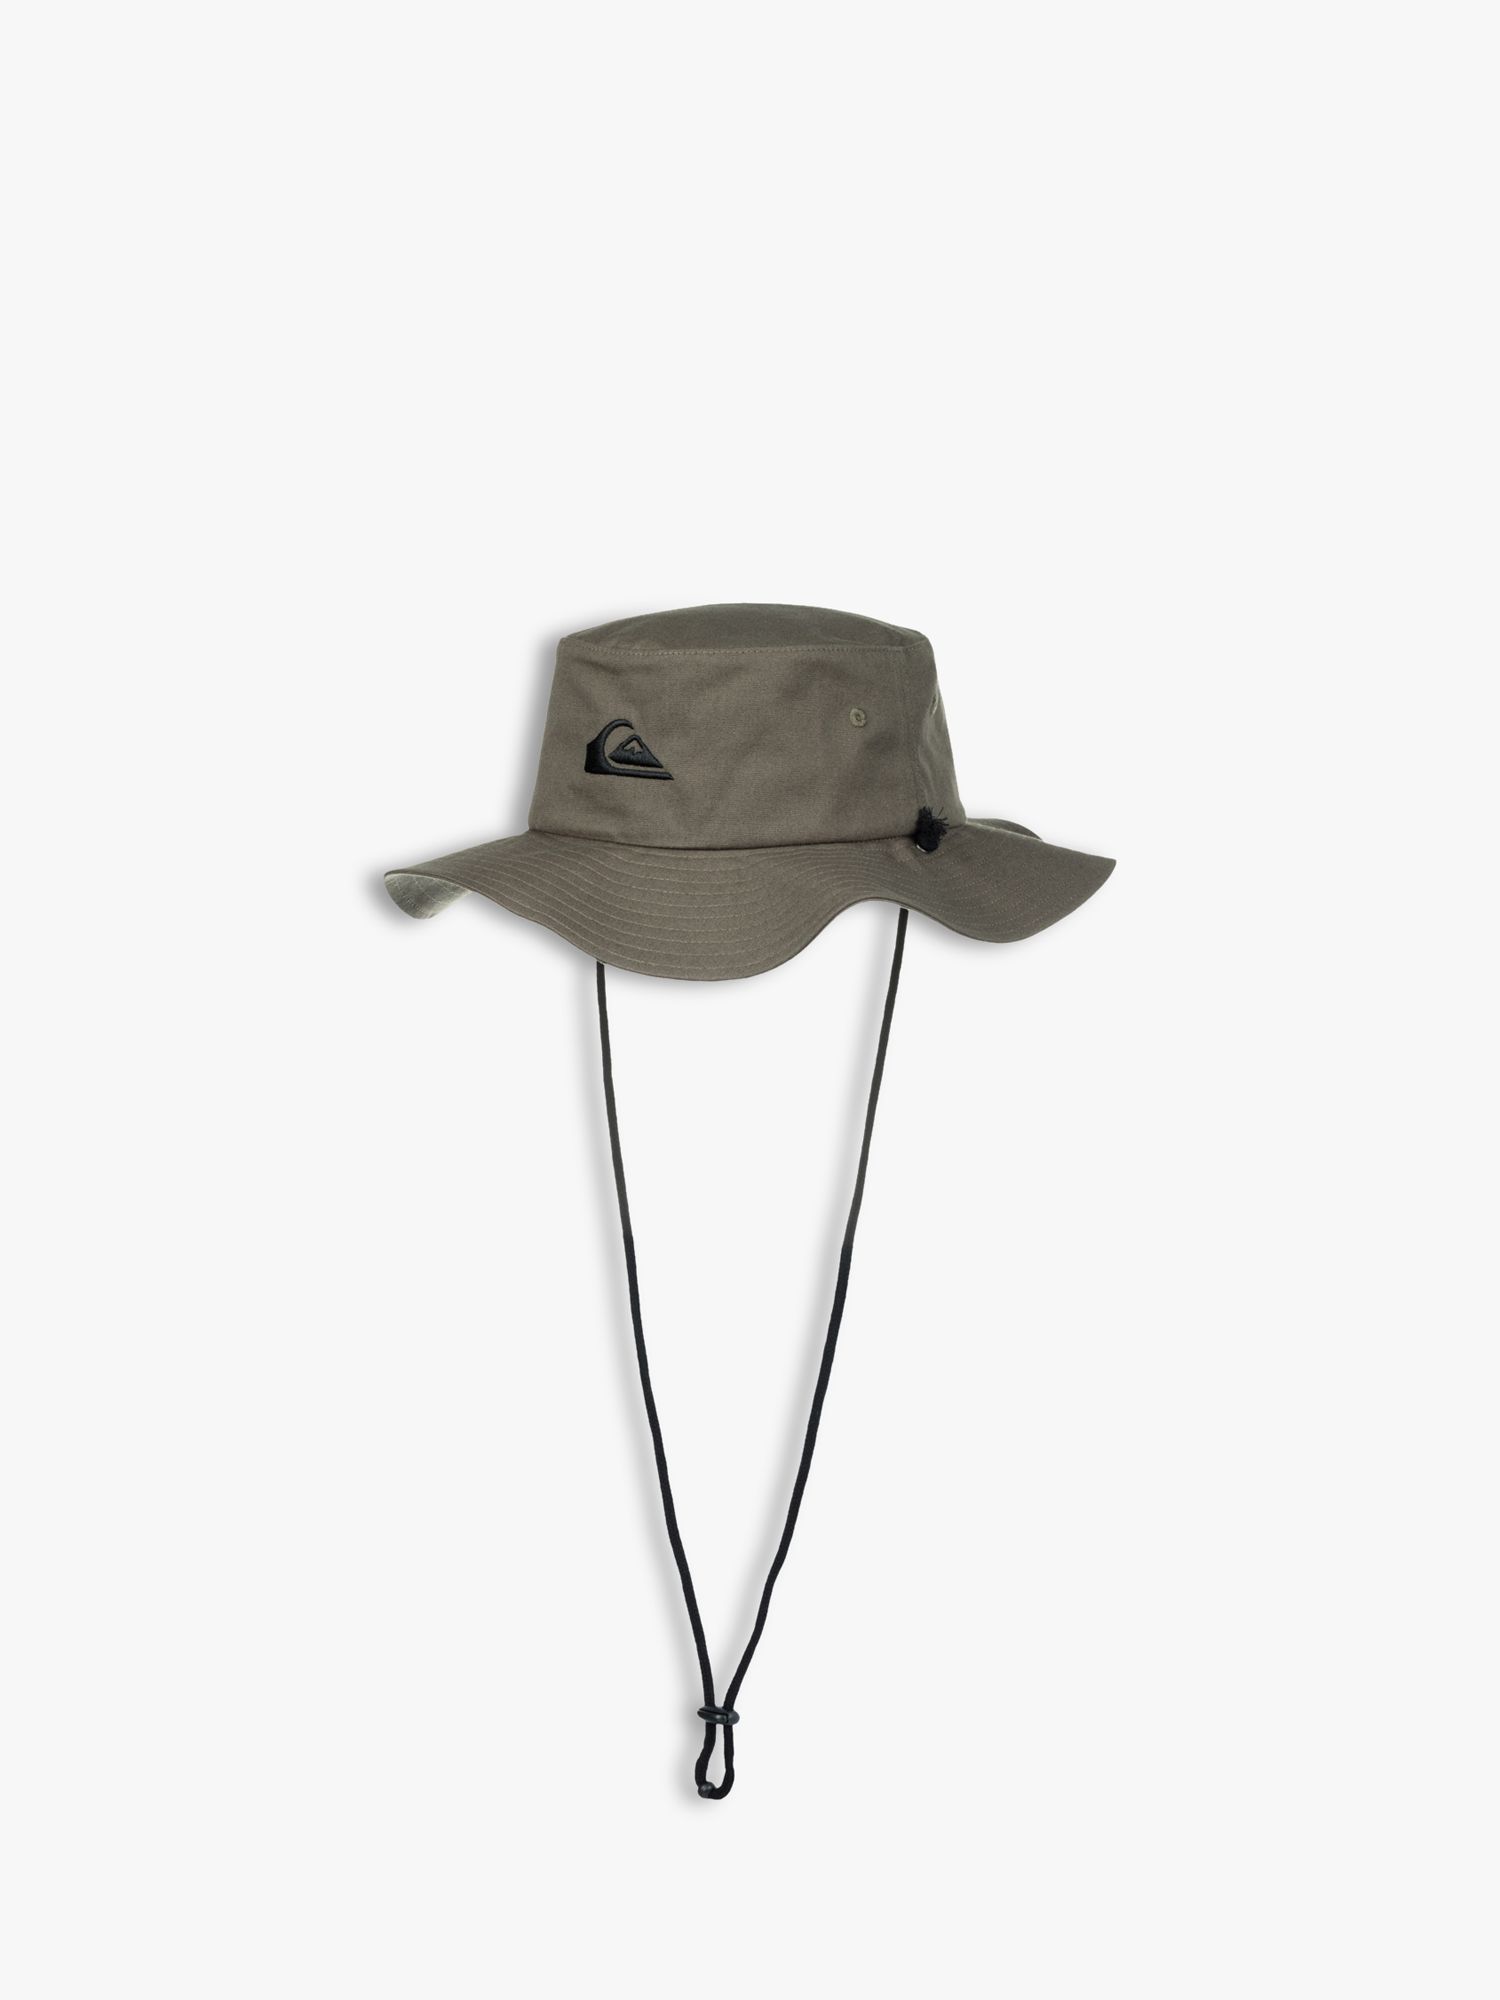 Quiksilver Safari Boonie Cotton Twill Hat, Thyme, S-M